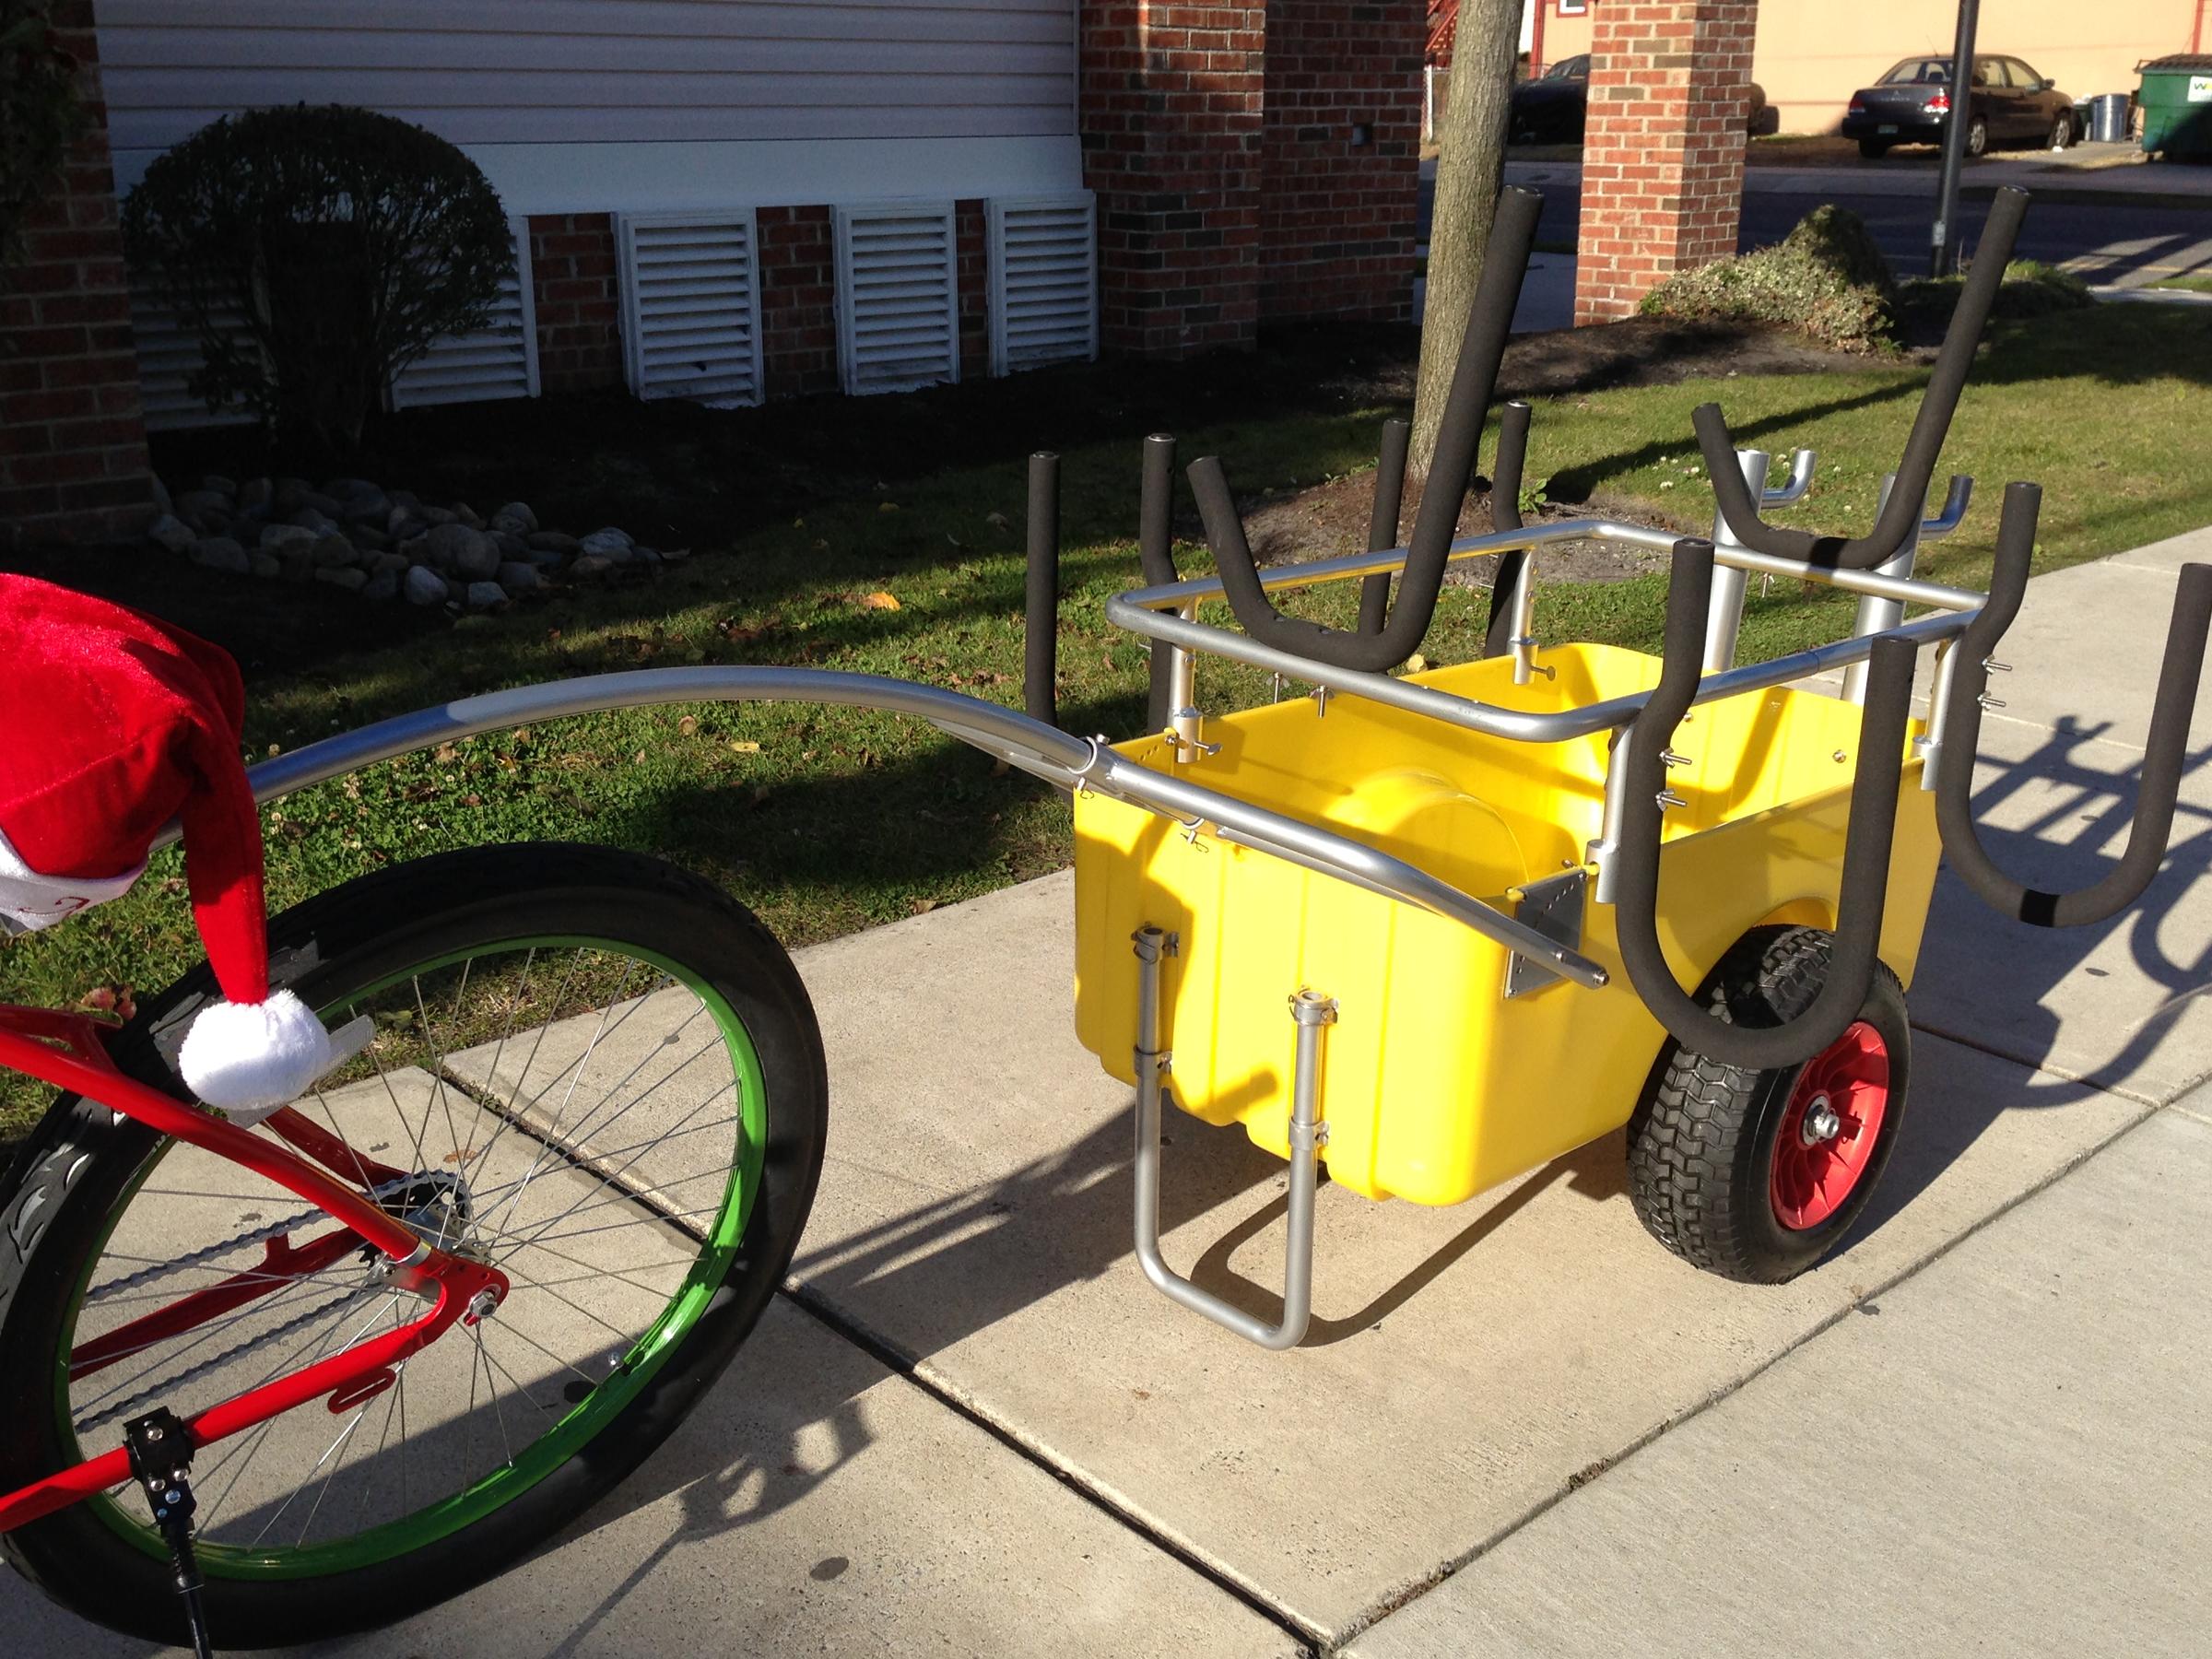 beach cart bike attachment